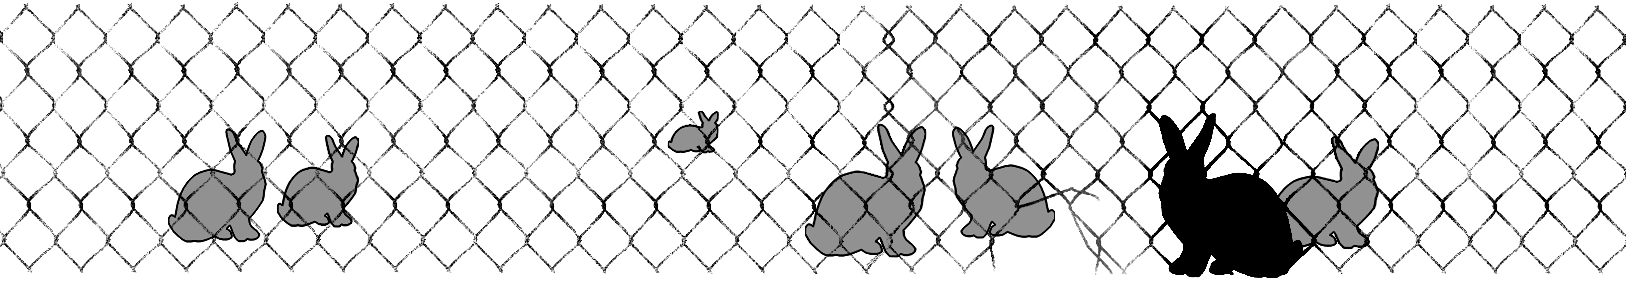 tplimg:blackrabbit:rabbitprooffence_web_15.gif